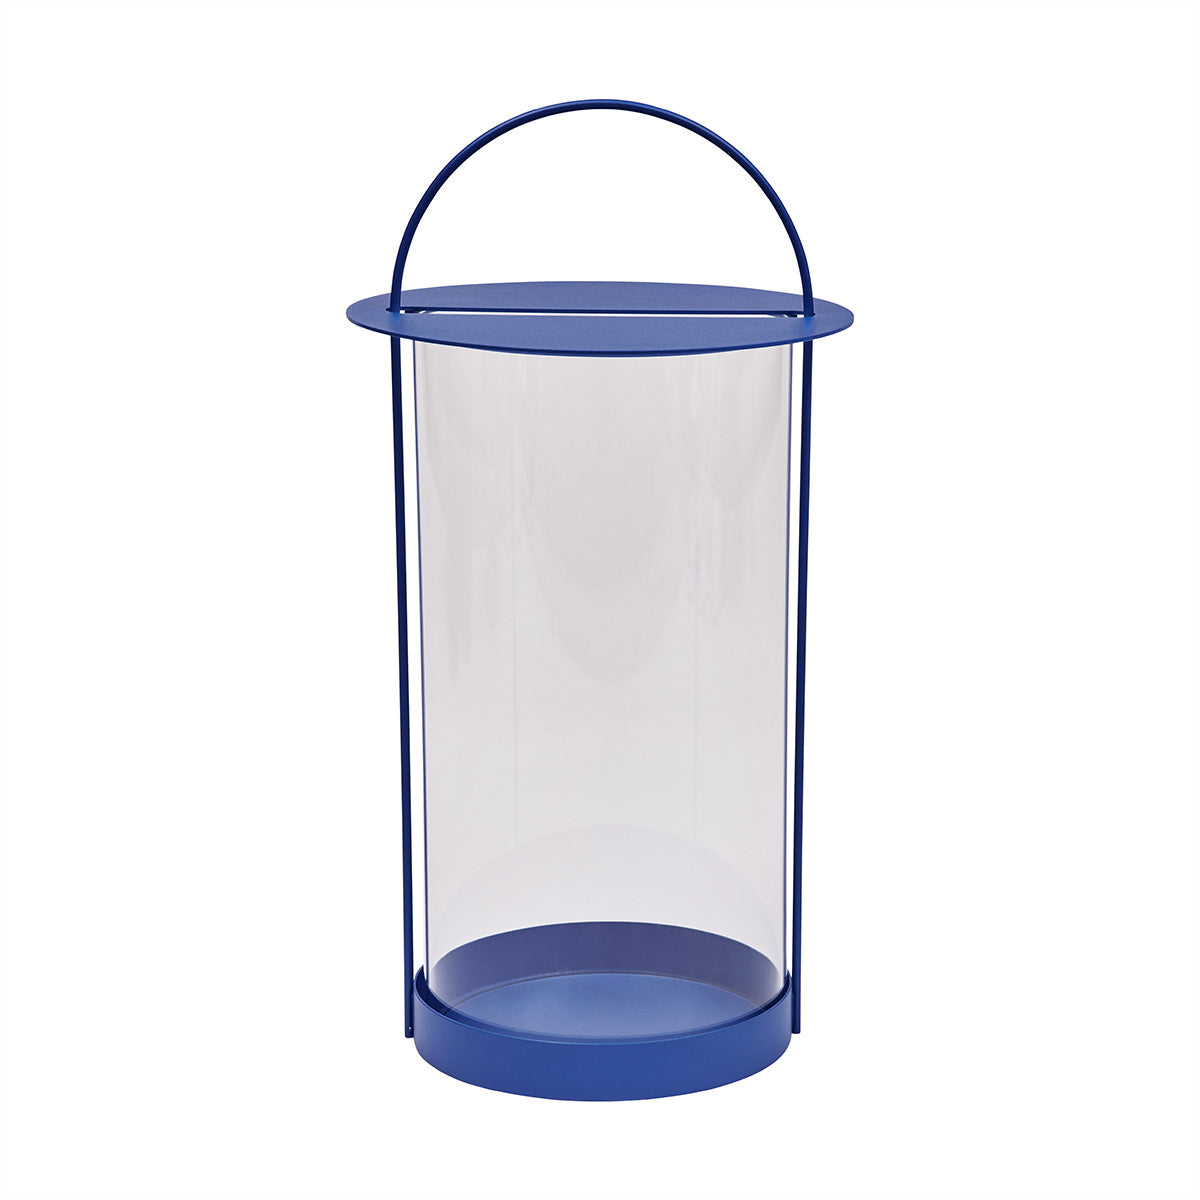 OYOY LIVING Maki Lantern - Large Lantern 609 Optic Blue